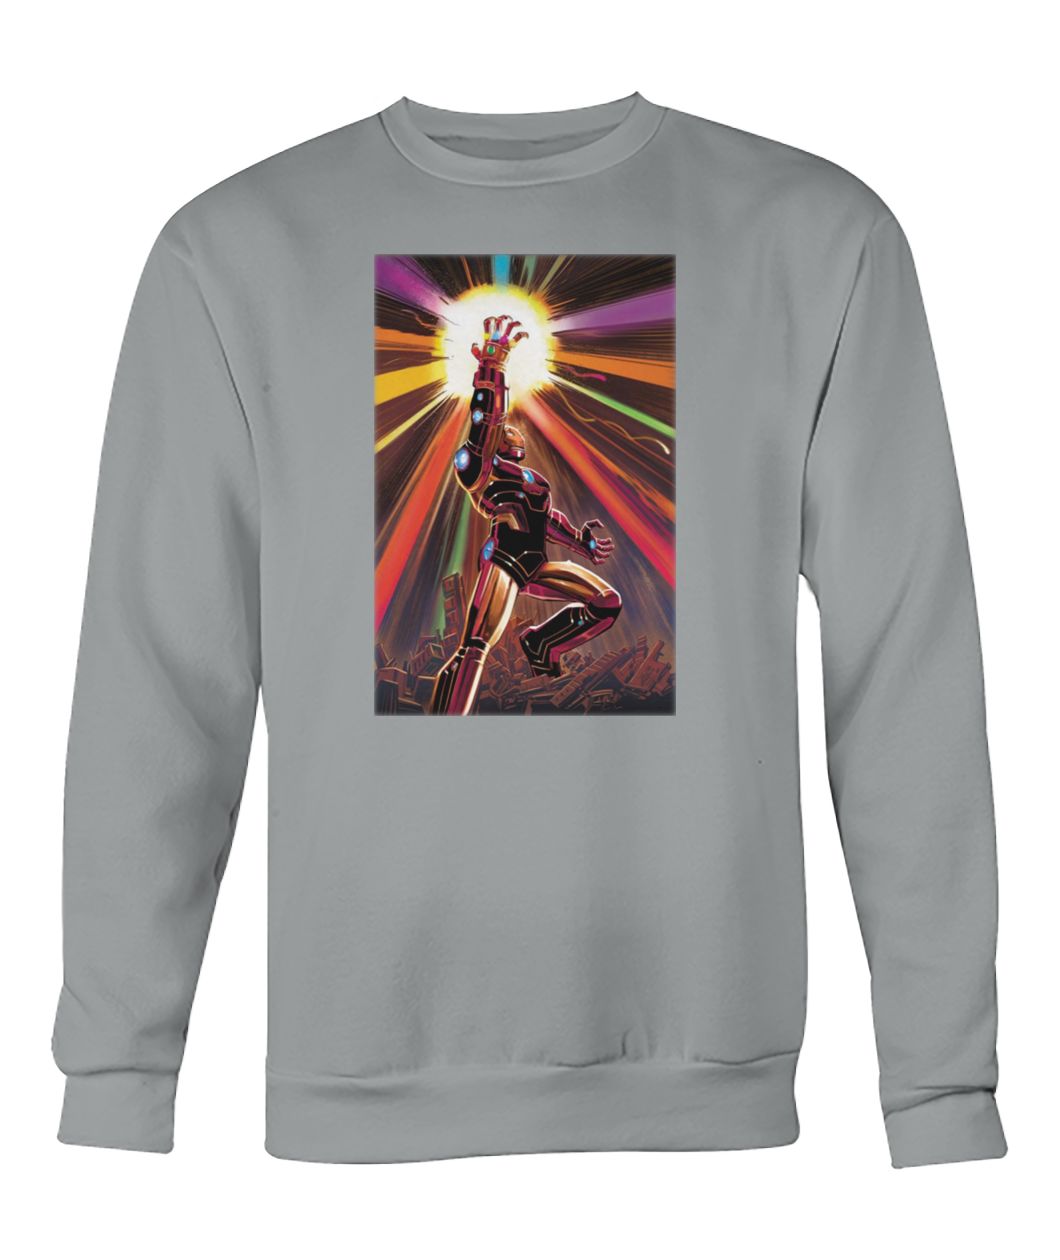 Avengers endgame Iron man infinity gauntlet I am Iron man crew neck sweatshirt